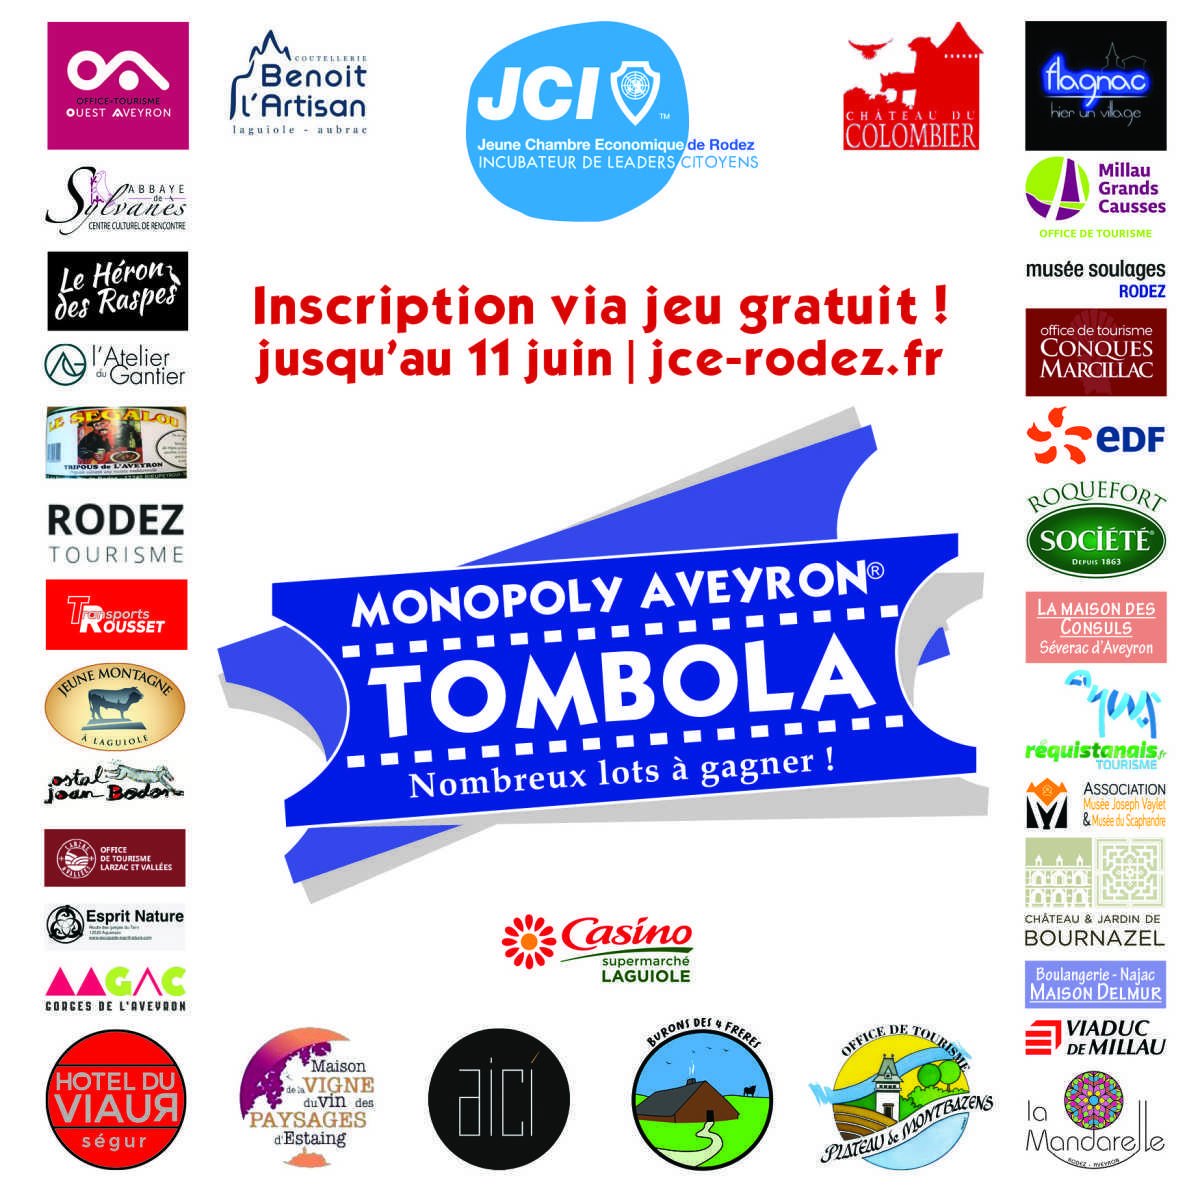 Monopoly Aveyron